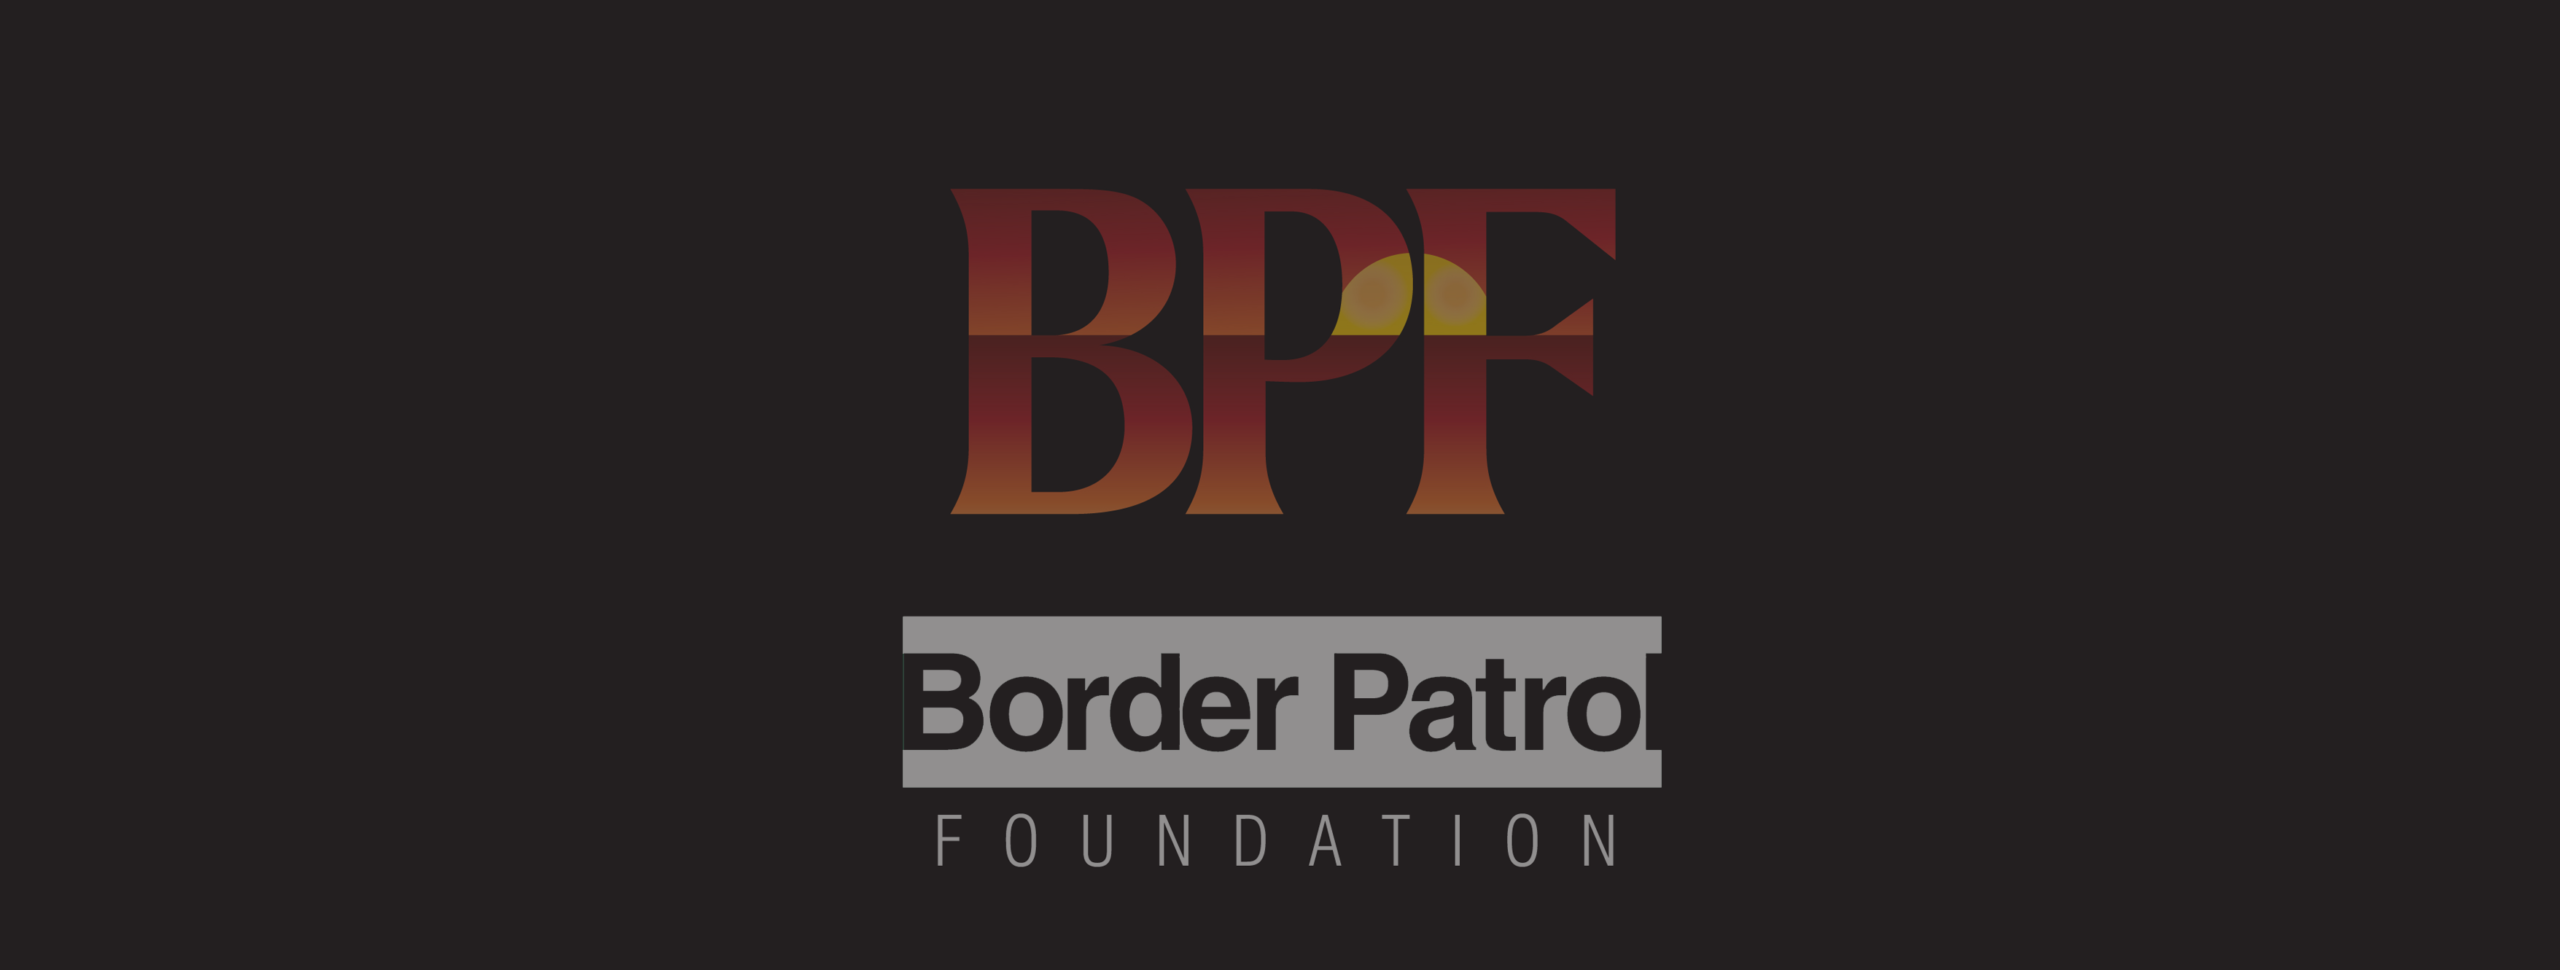 Border Patrol Foundation Logo